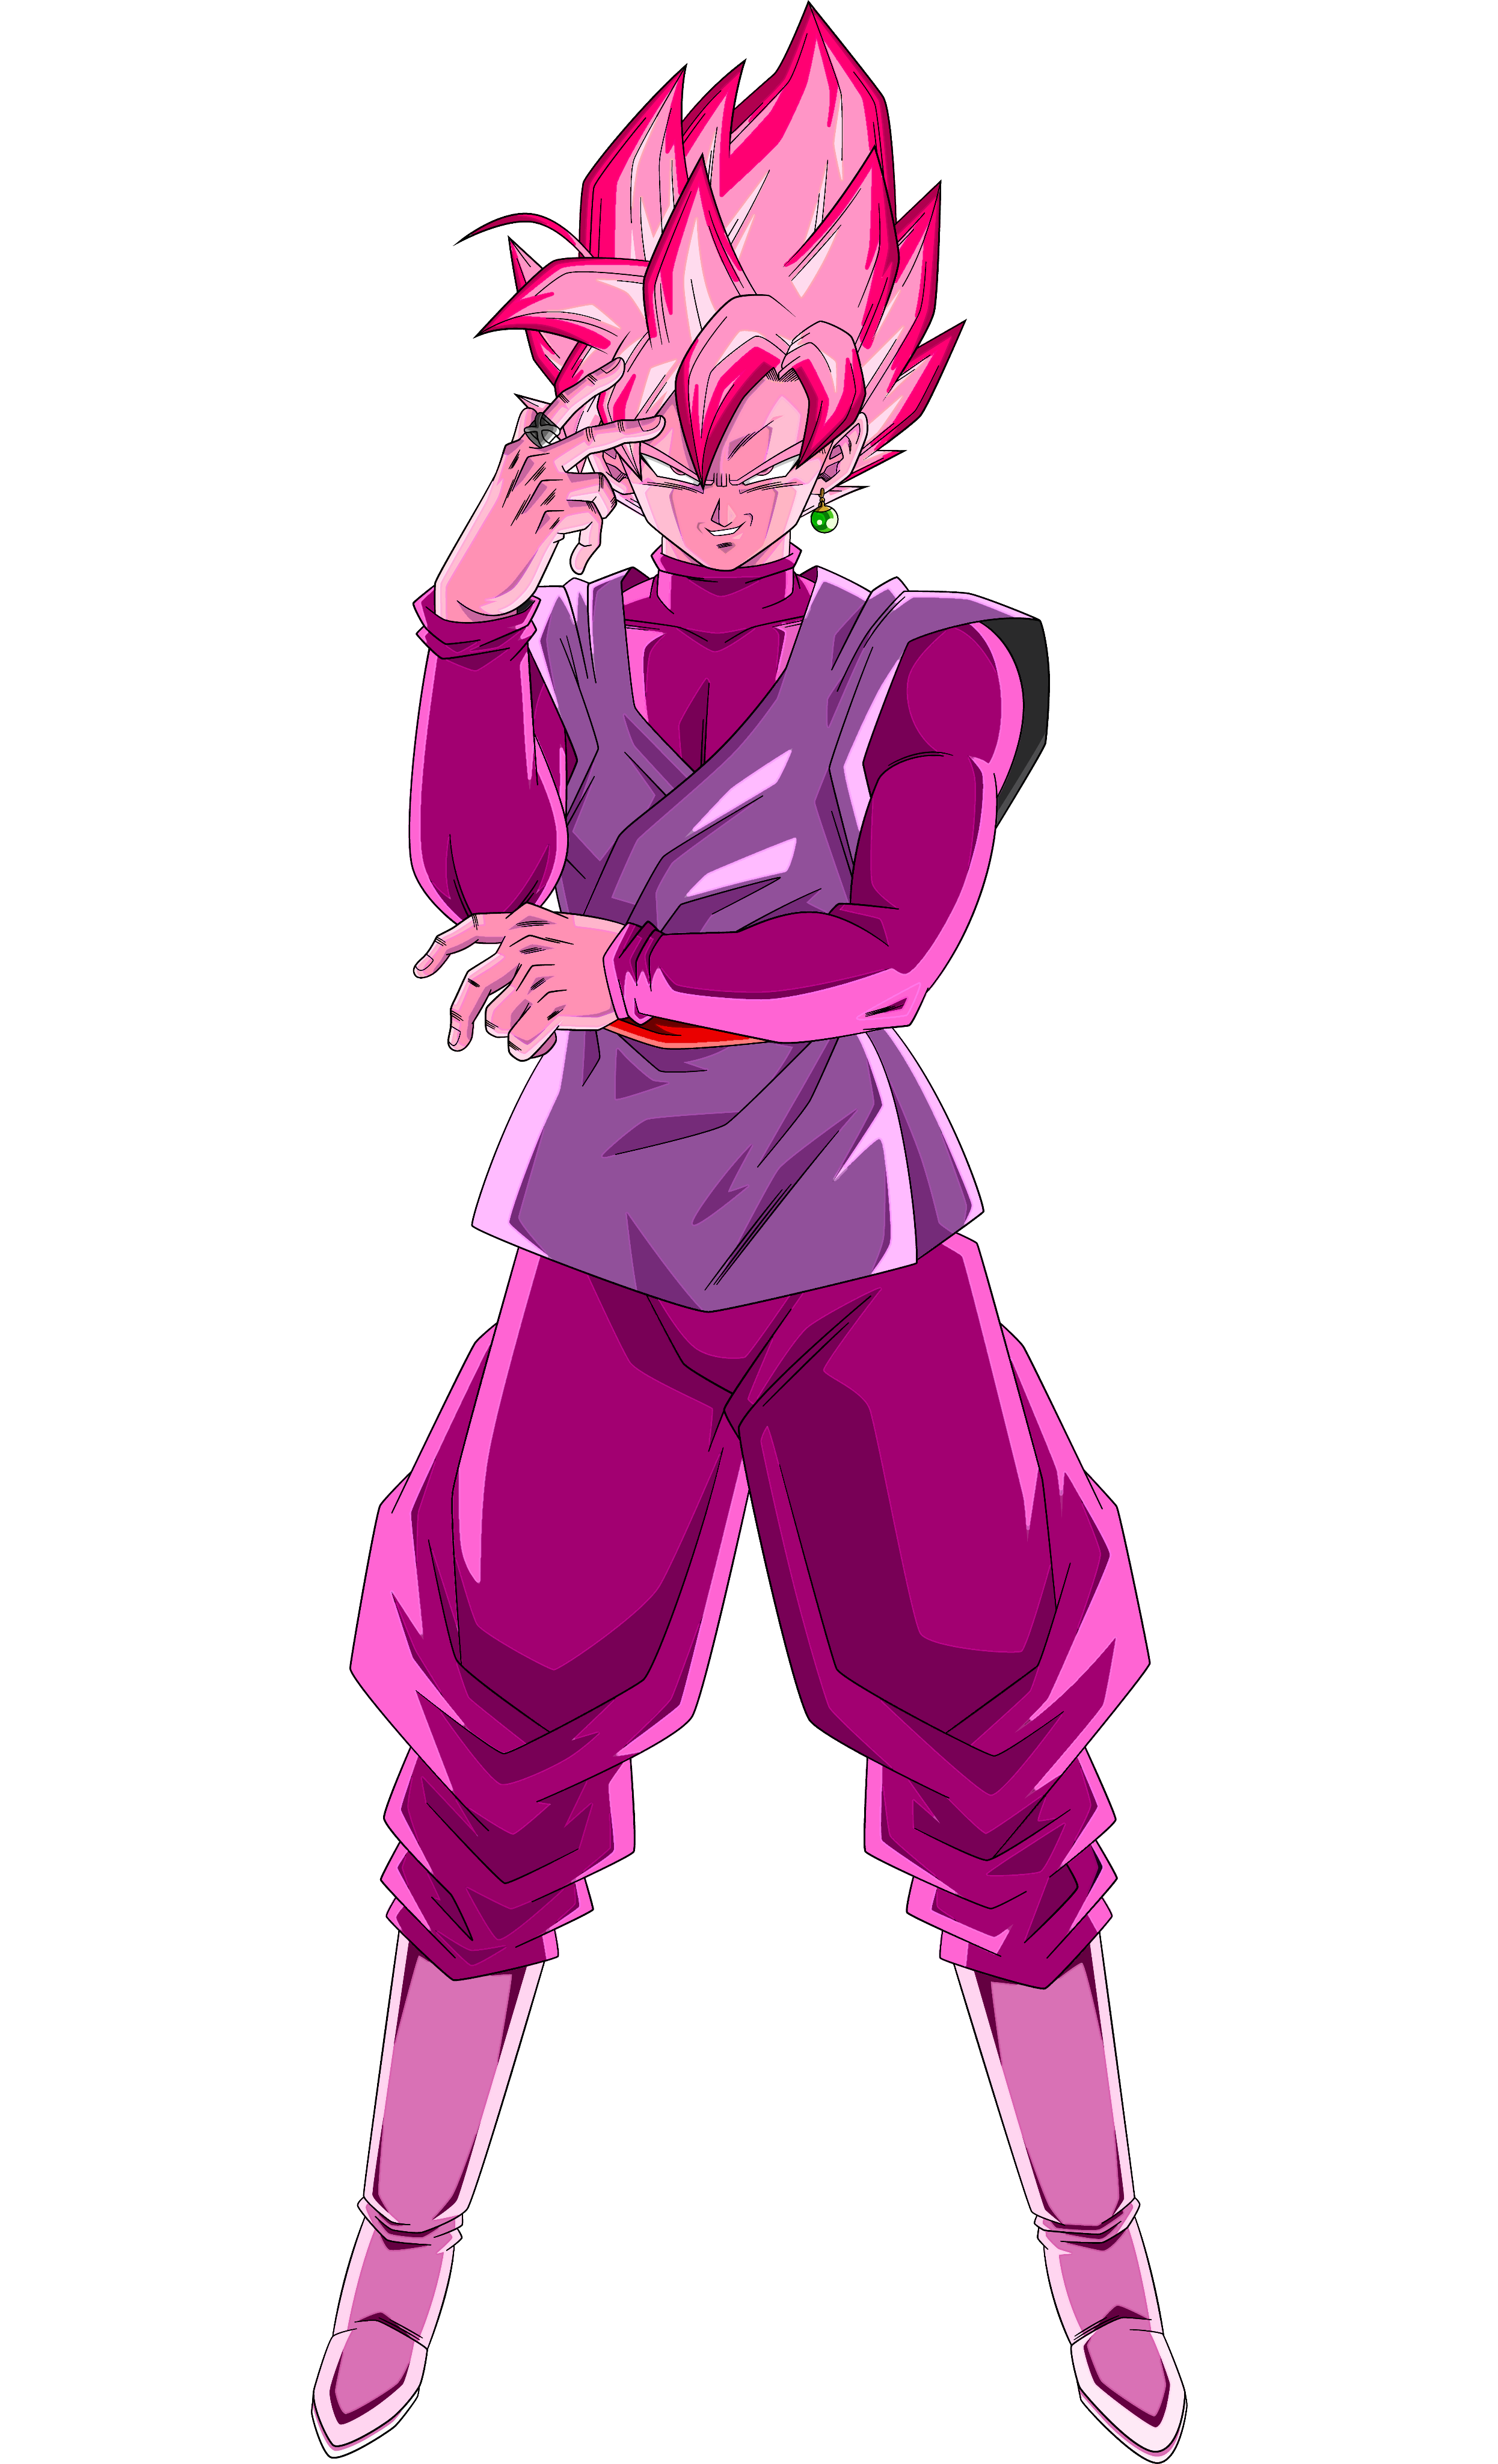 Goku (Super Saiyan 3) by TheTabbyNeko on DeviantArt